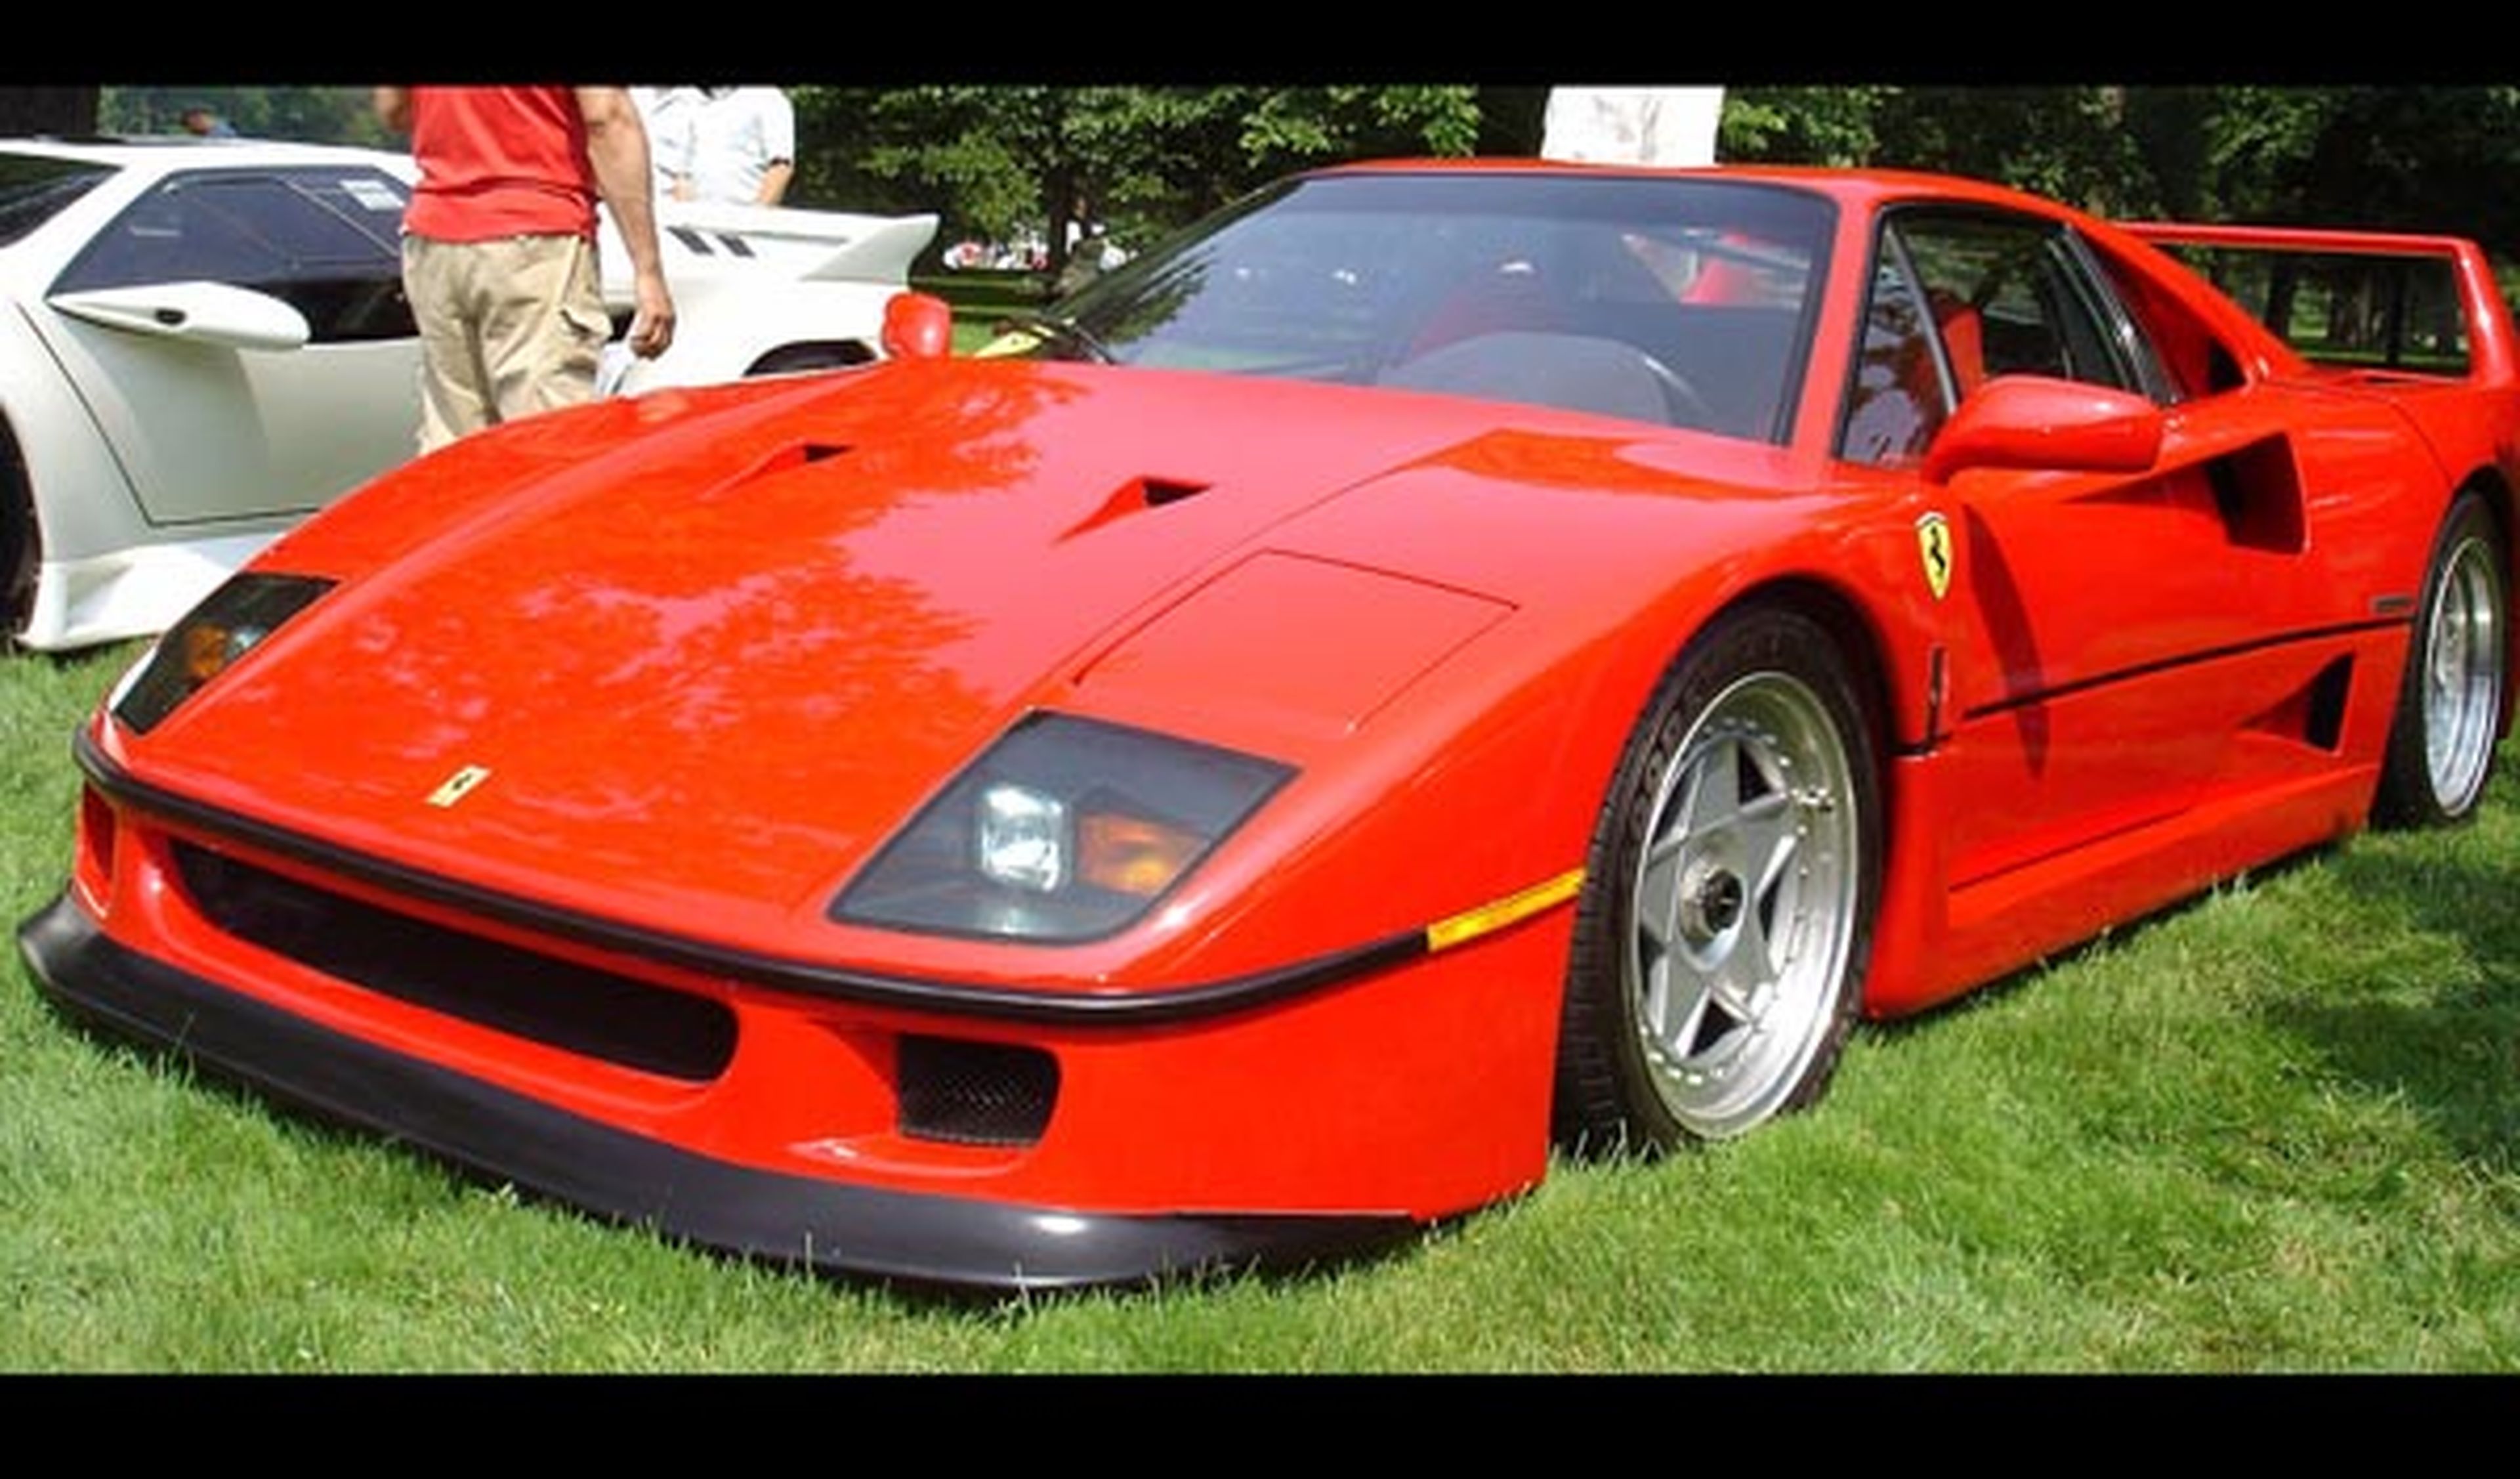 Sale a subasta el Ferrari F40 de Rod Stewart